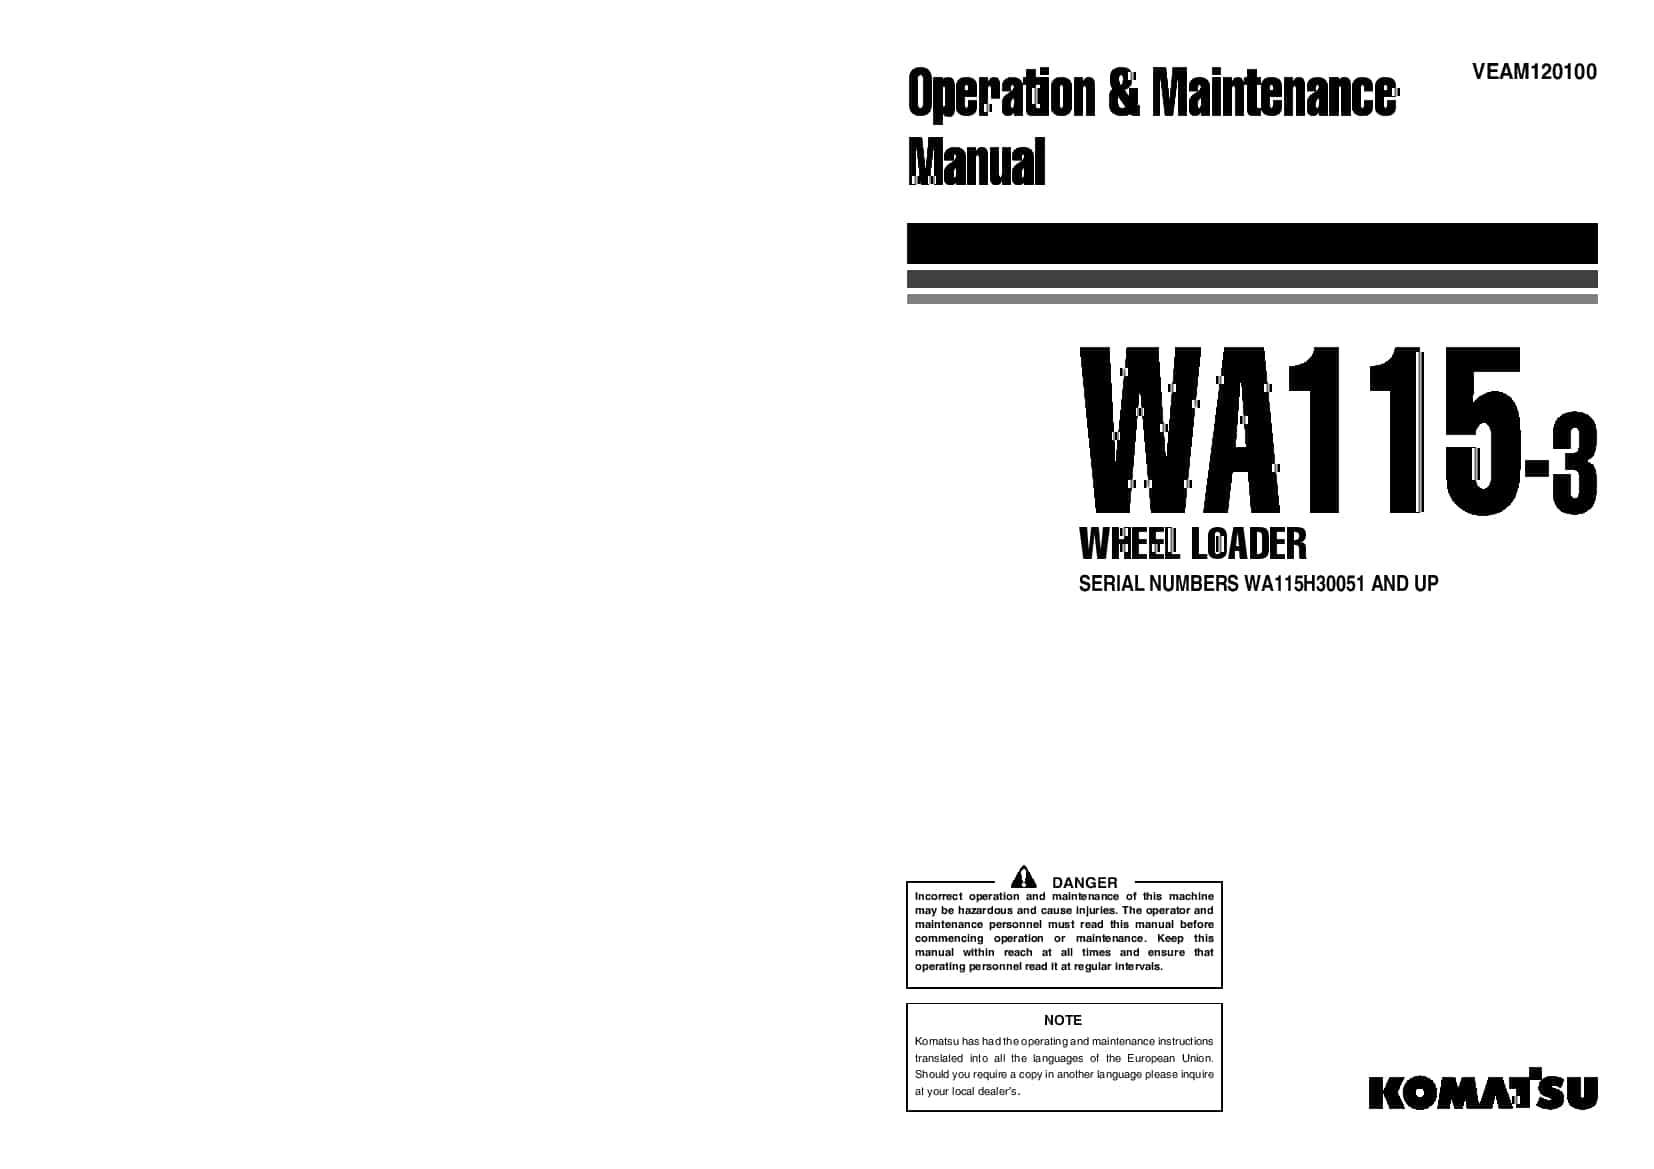 Komatsu css 2014 parts service manual pdf | mecanicos actuales